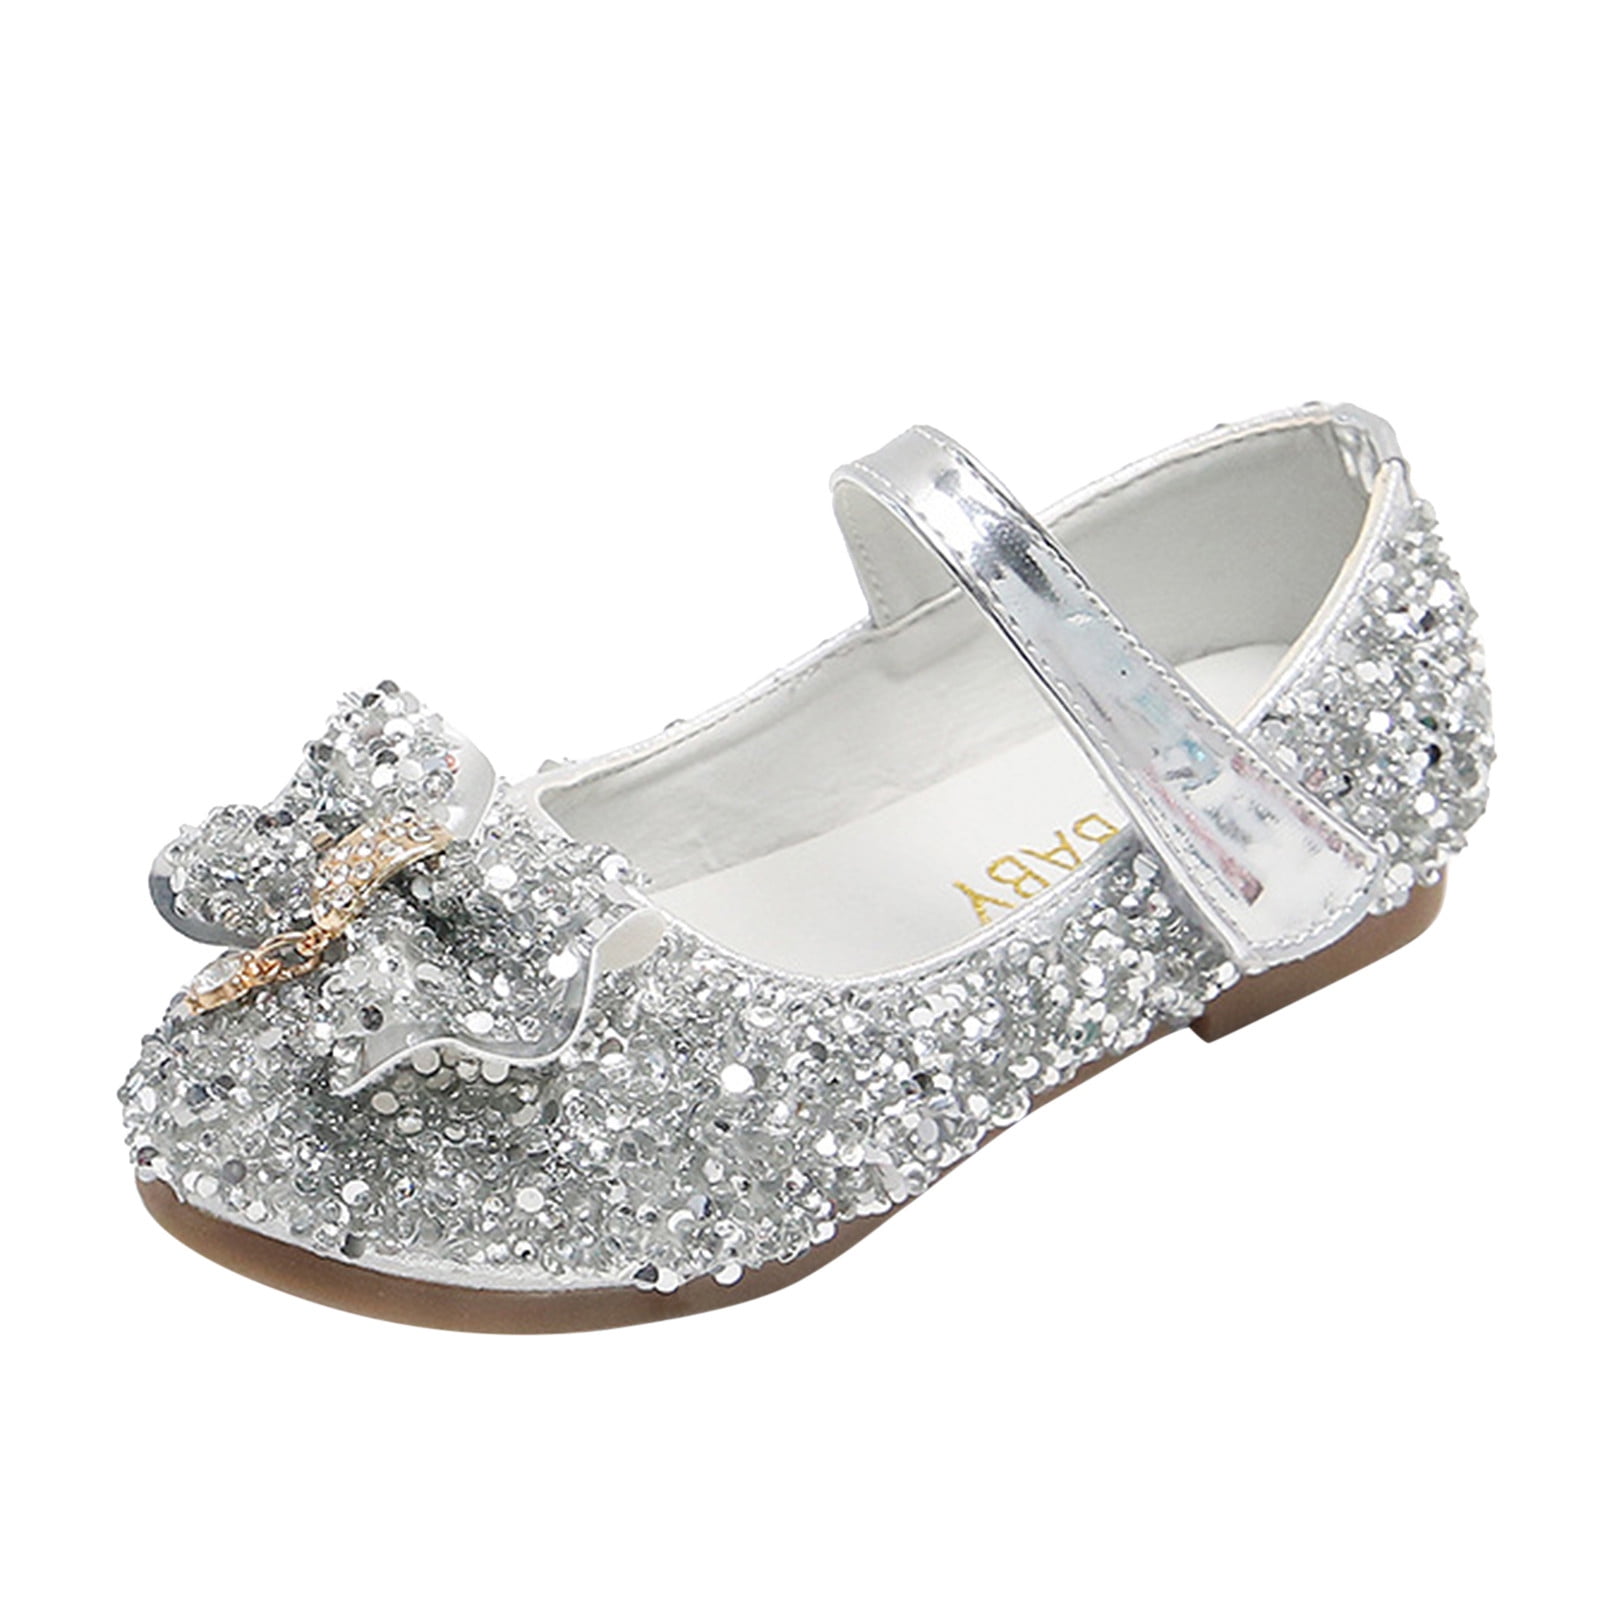 Toddler K ids Shoes Fashion Bow Girls Non-Slip Sandals Princess Shoes B ...